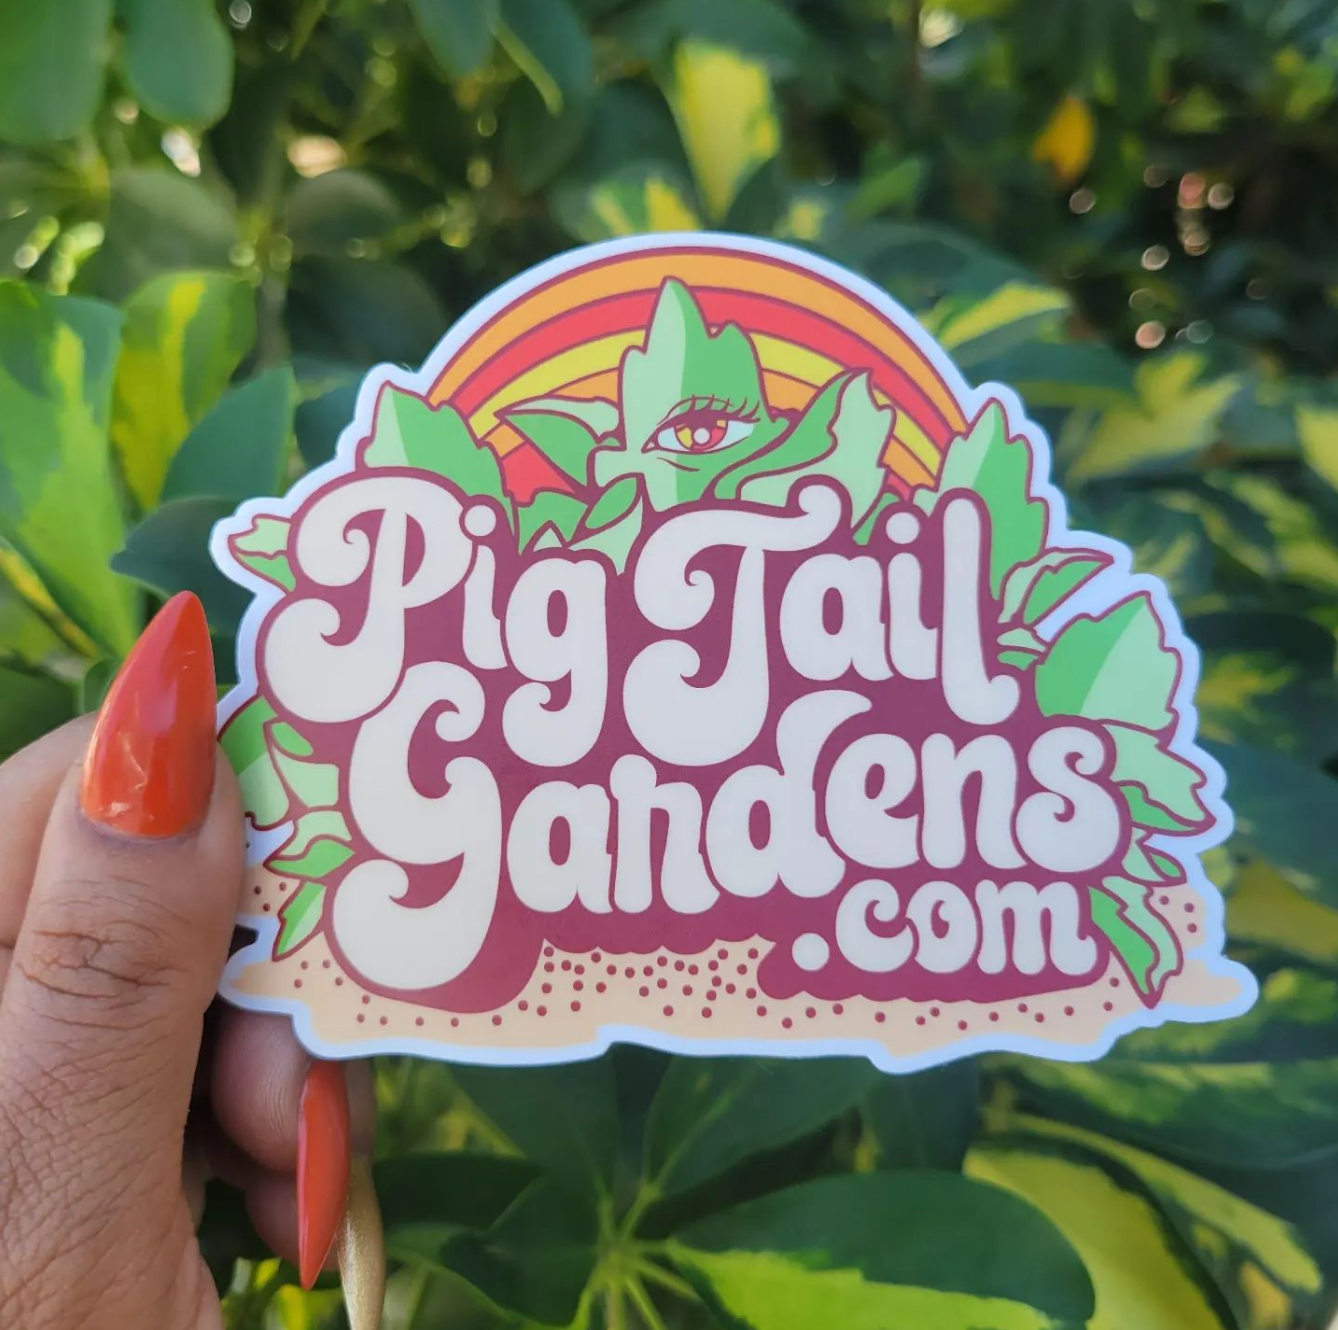 www.pigtailgardens.com